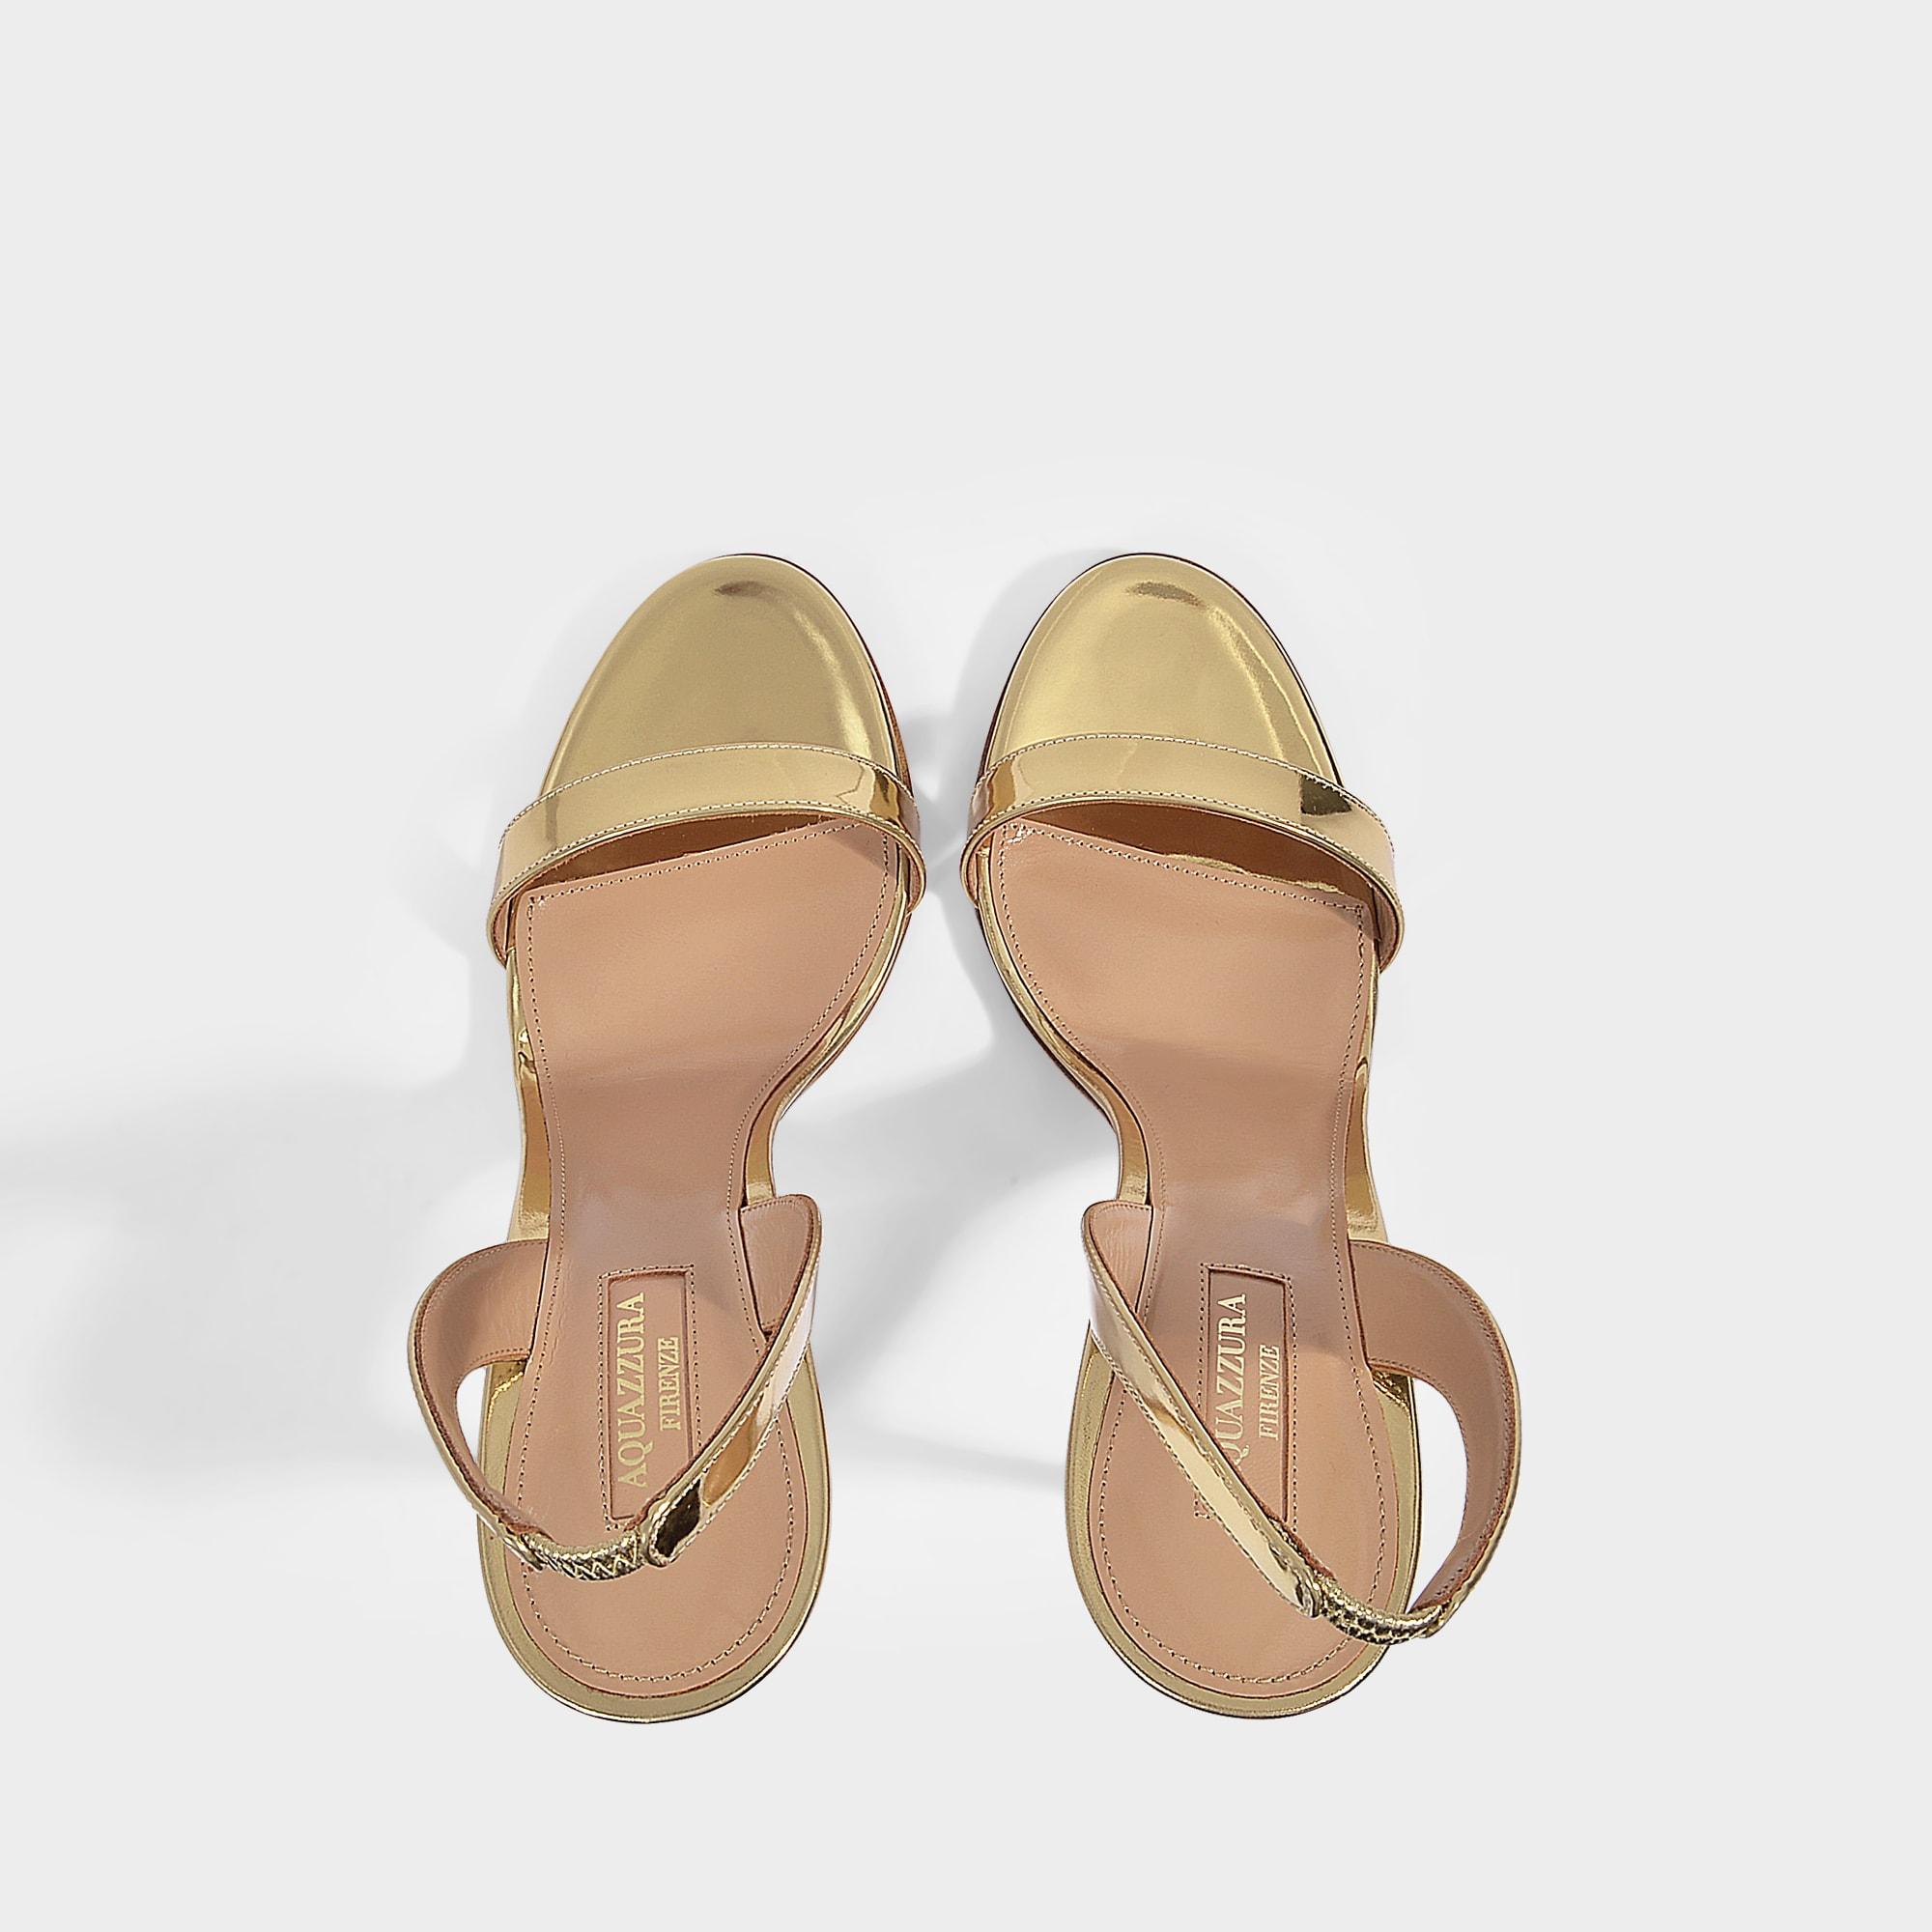 Aquazzura So Nude 105 Sandals In Soft Gold Leather in Metallic | Lyst